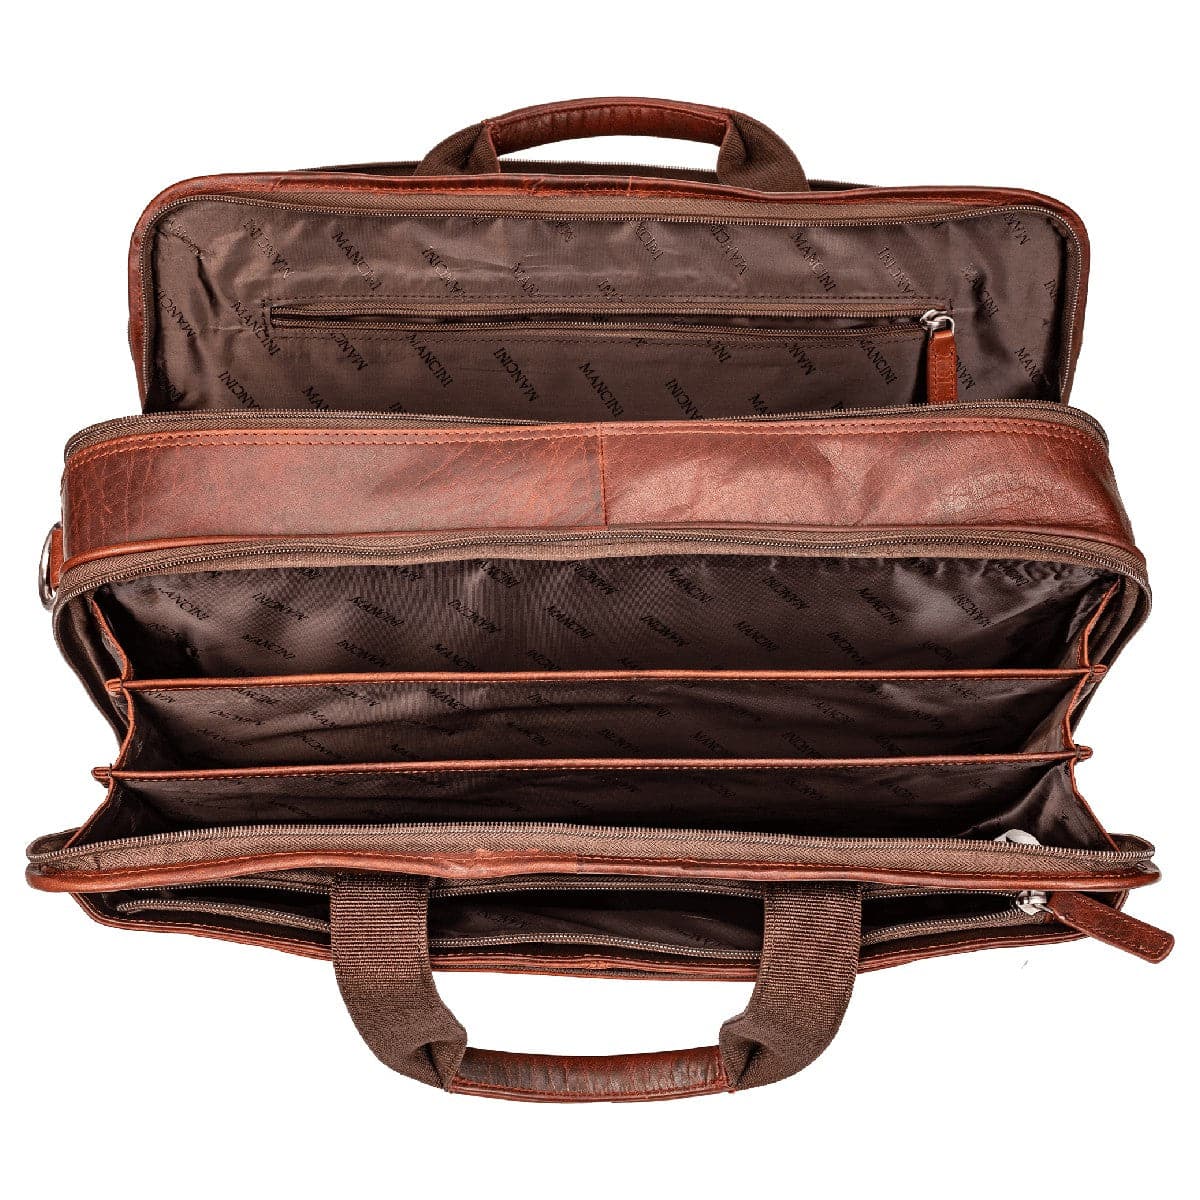 Mancini Buffalo Double Compartment Top Zipper 15.6" Laptop / Tablet Briefcase